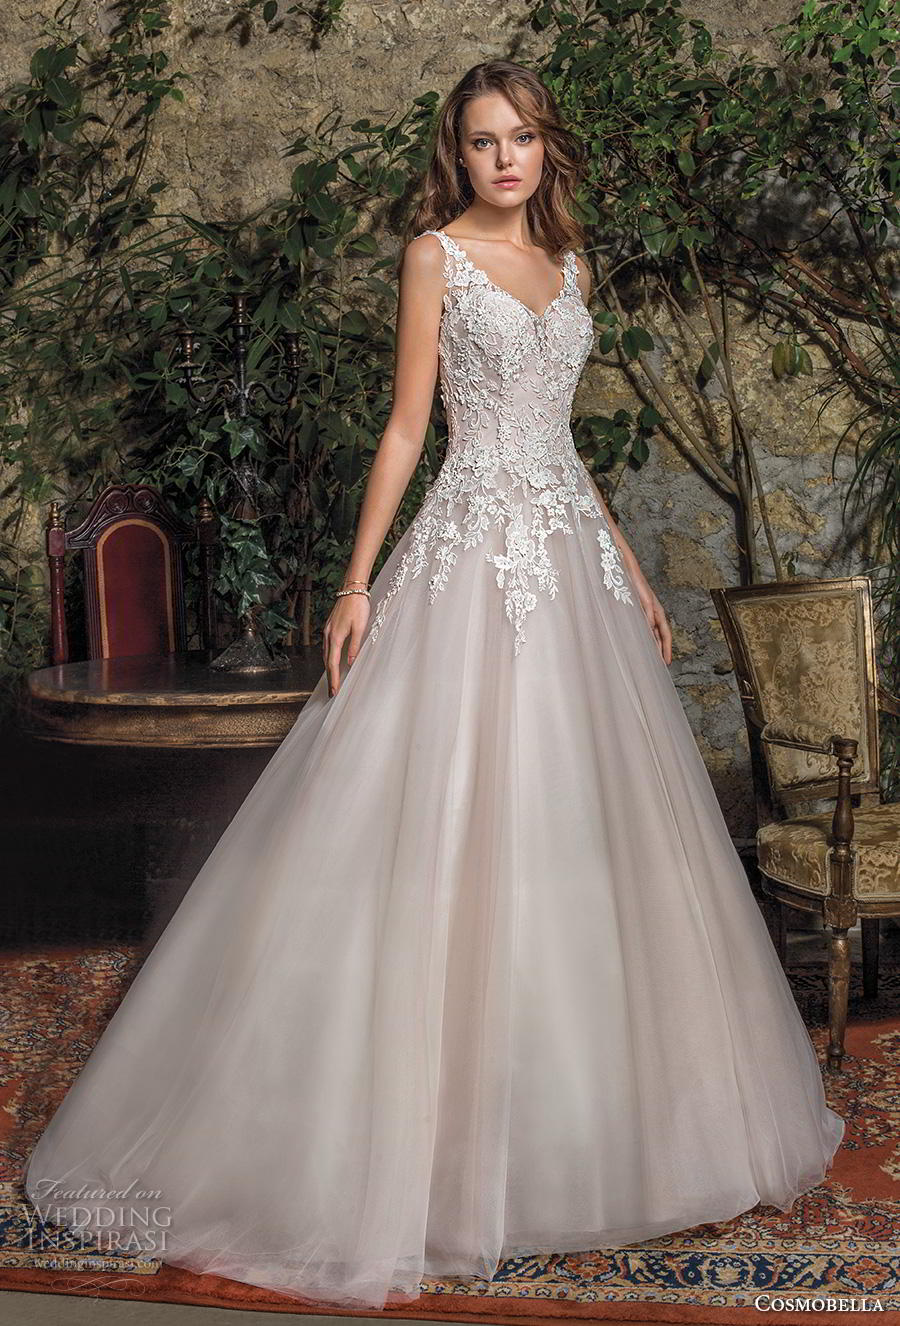 Cosmobella 2019 Wedding Dresses | Wedding Inspirasi